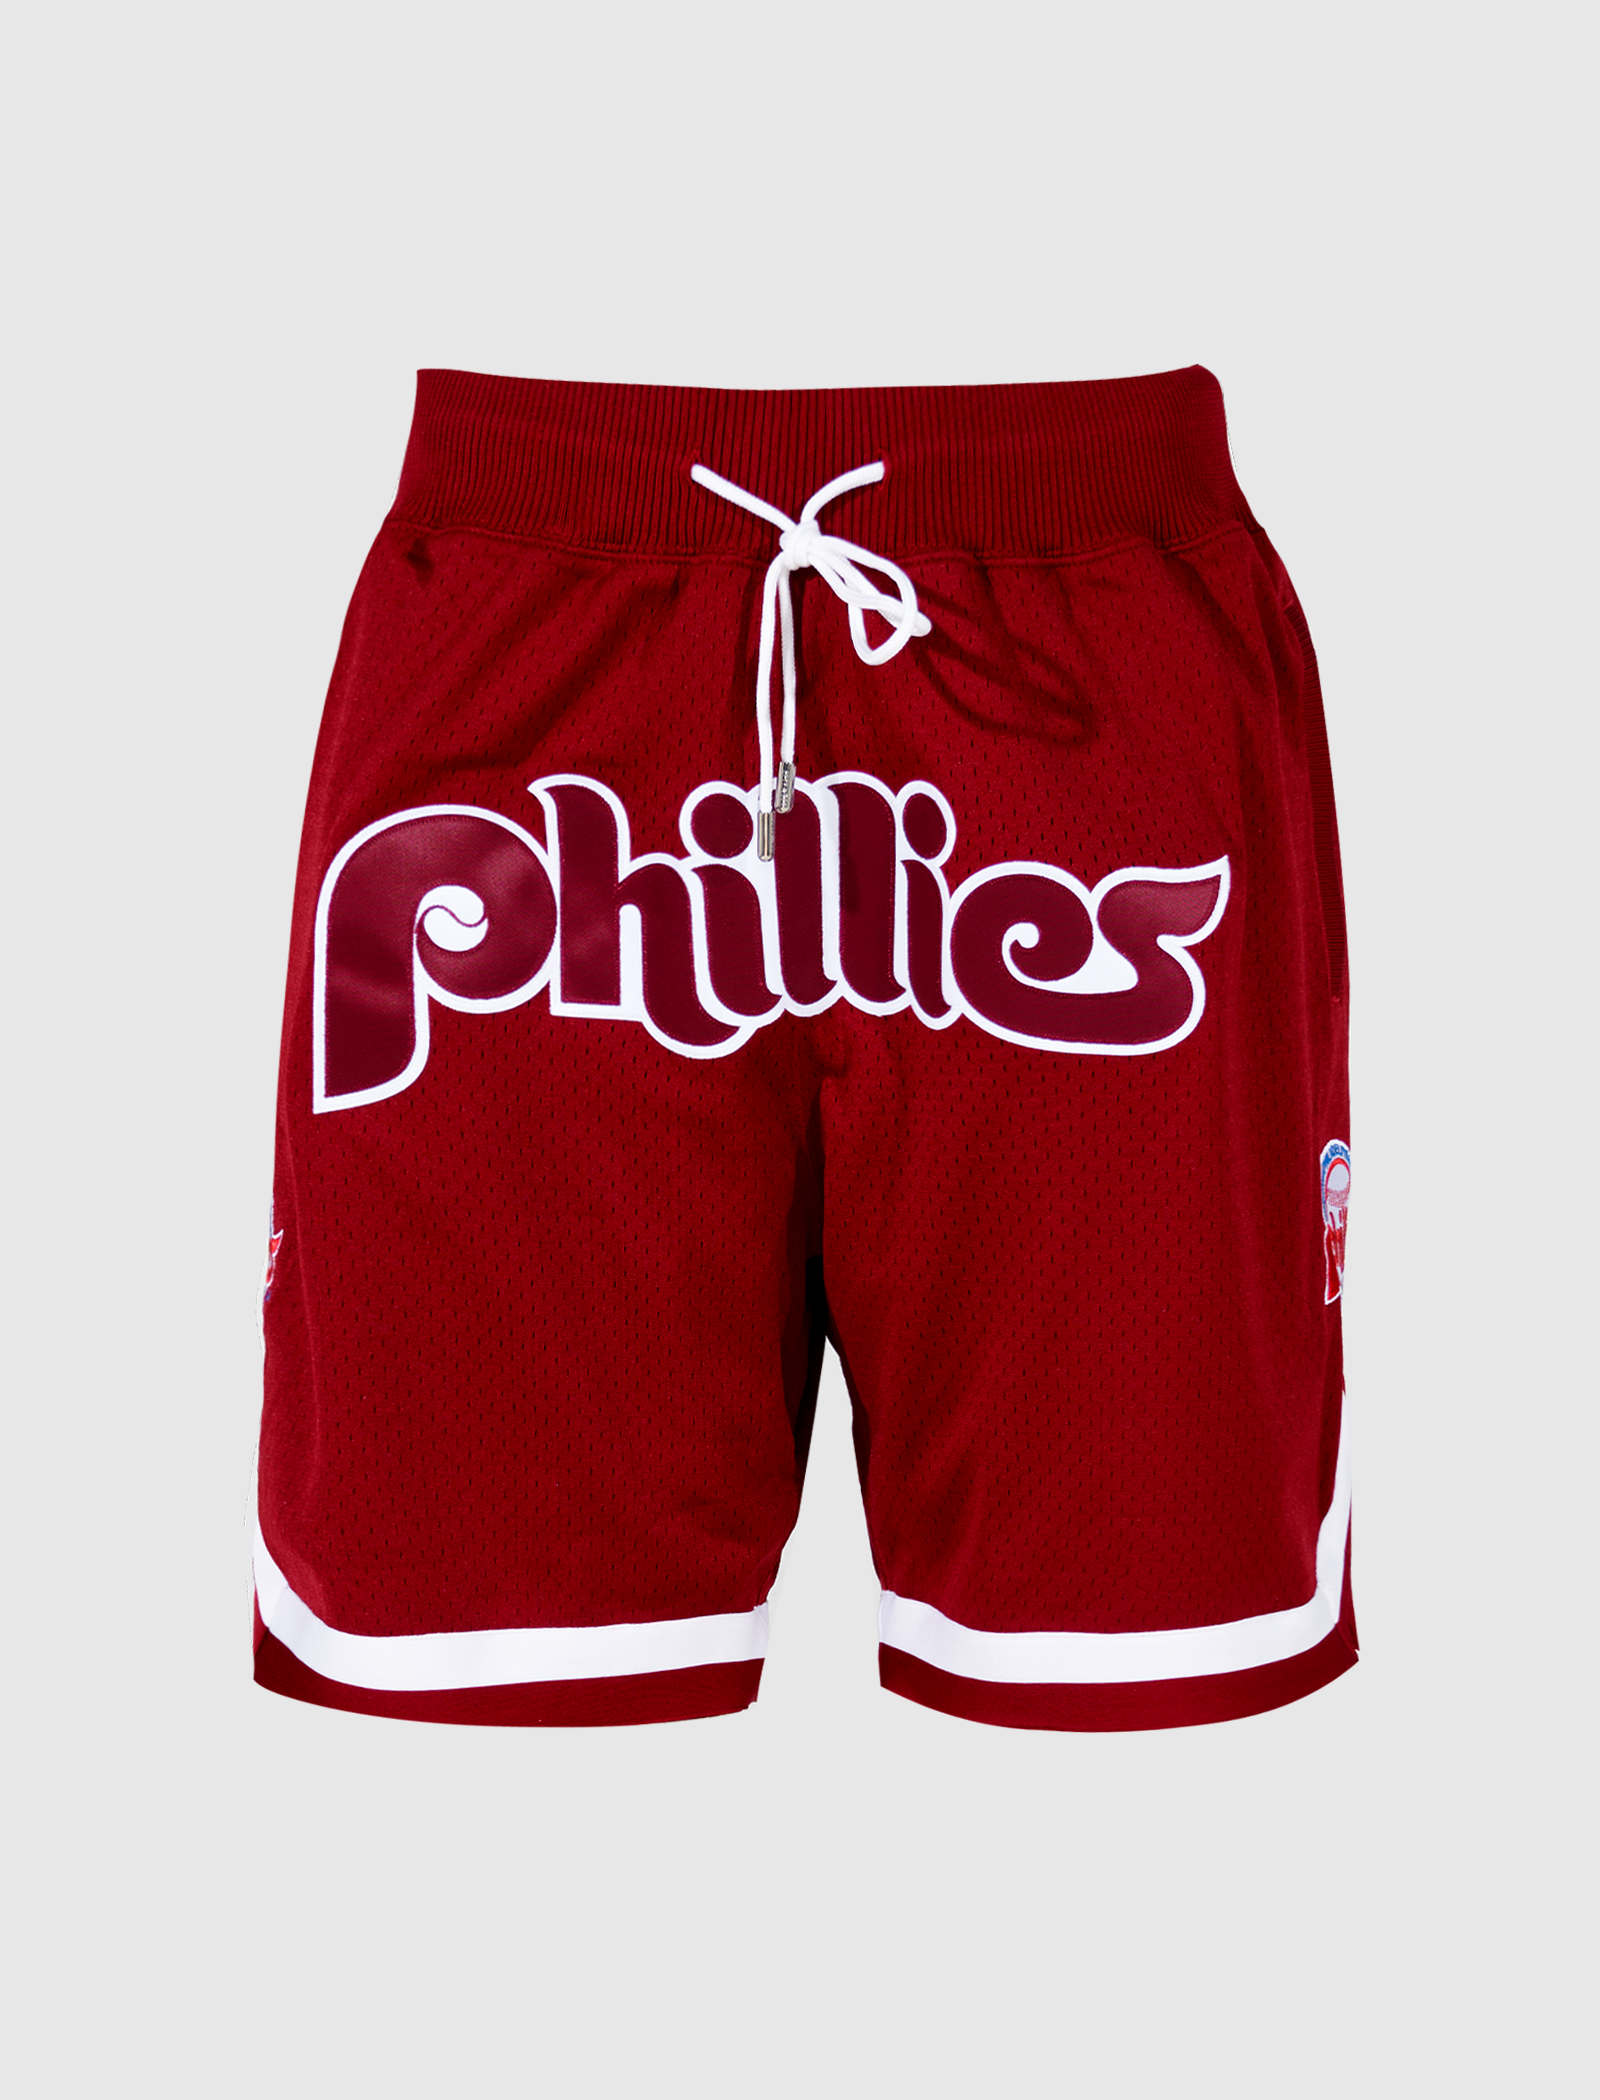  Mitchell & Ness Adult Size Large Philadelphia Phillies Big Face  Short Sleeve Shirt - Sky Blue : Sports & Outdoors